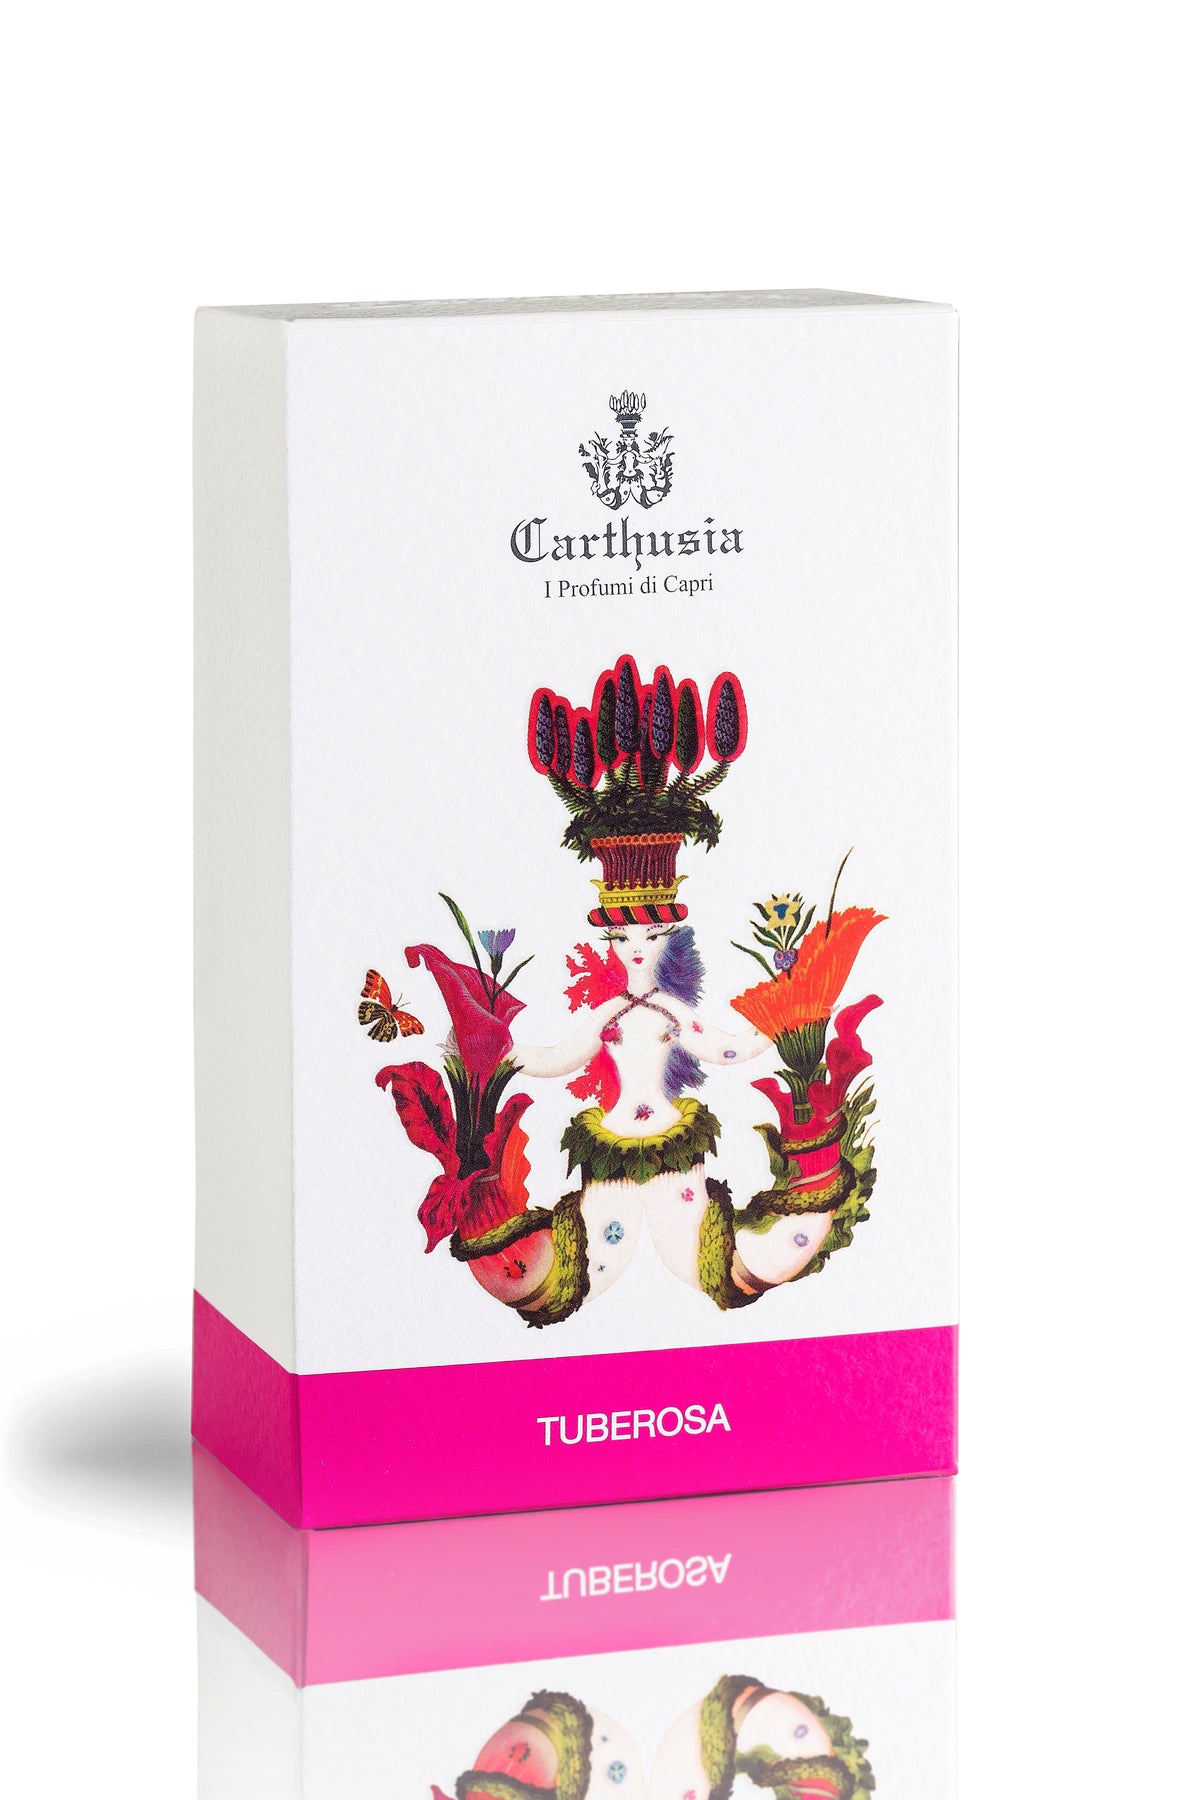 Carthusia Tuberosa Eau de Parfum - 50ml